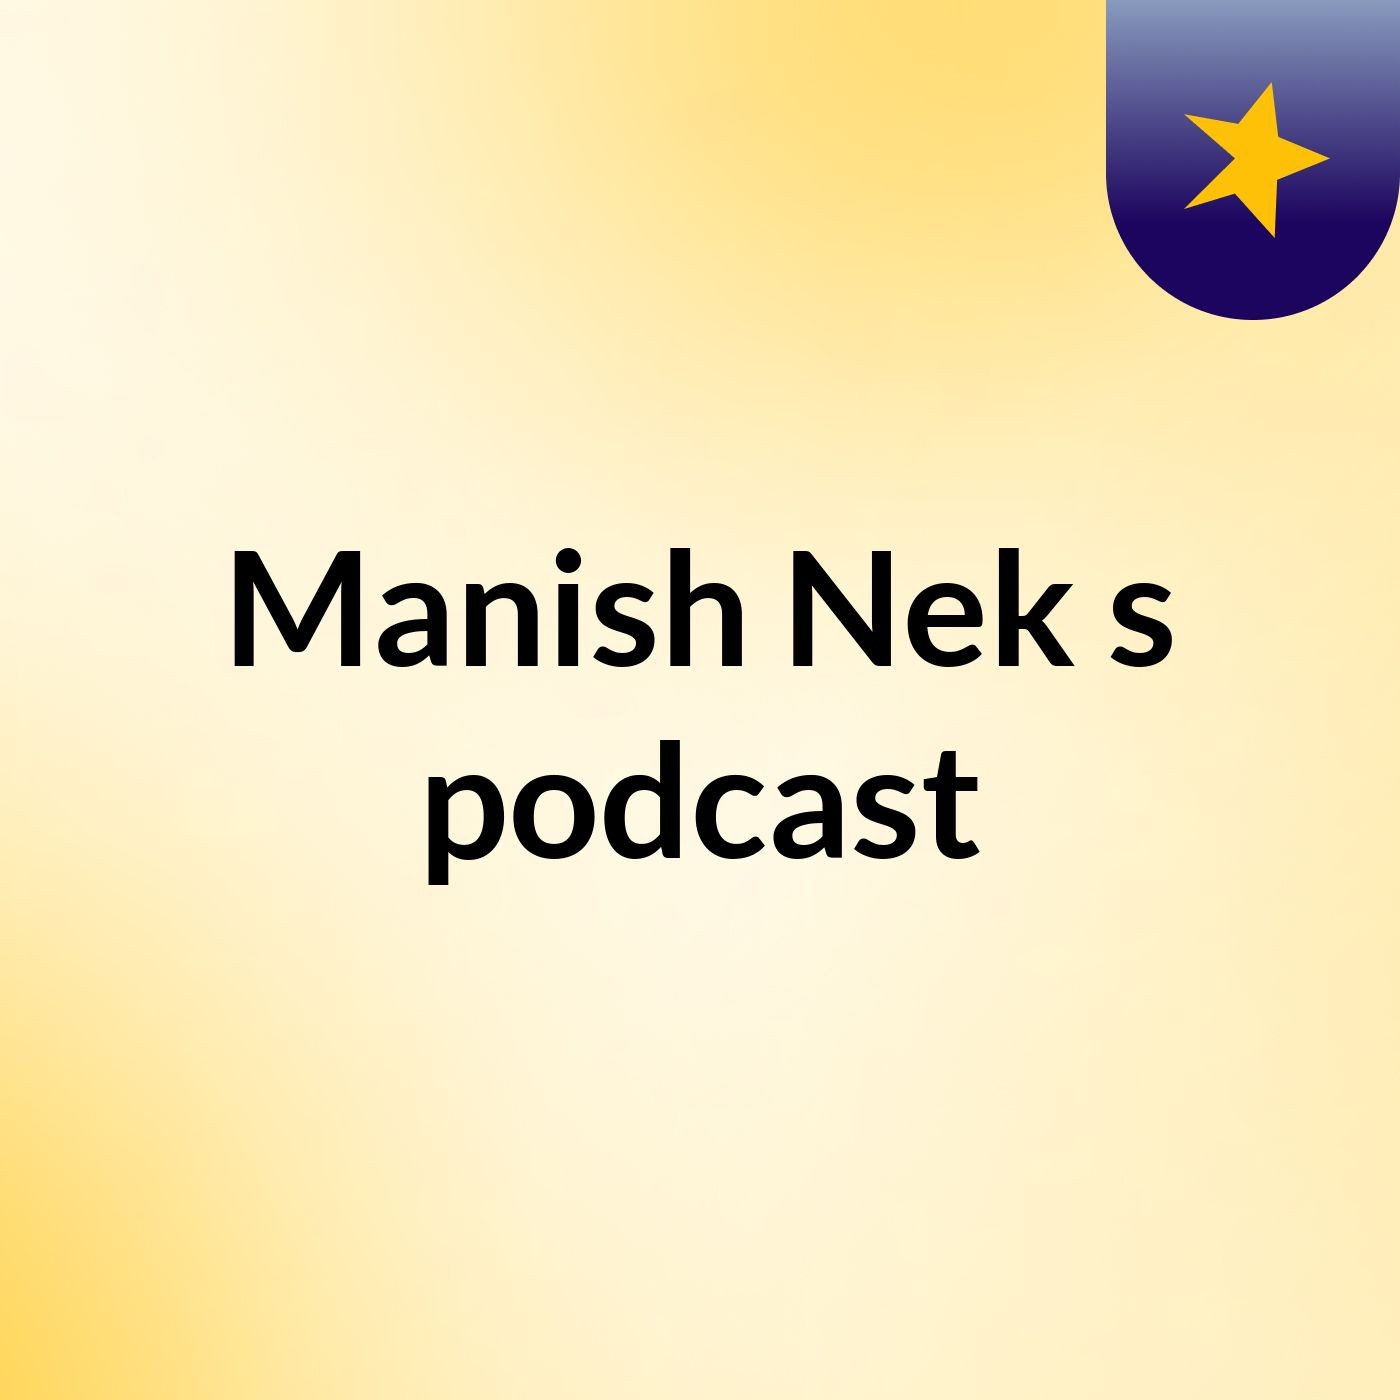 Manish Nek's podcast